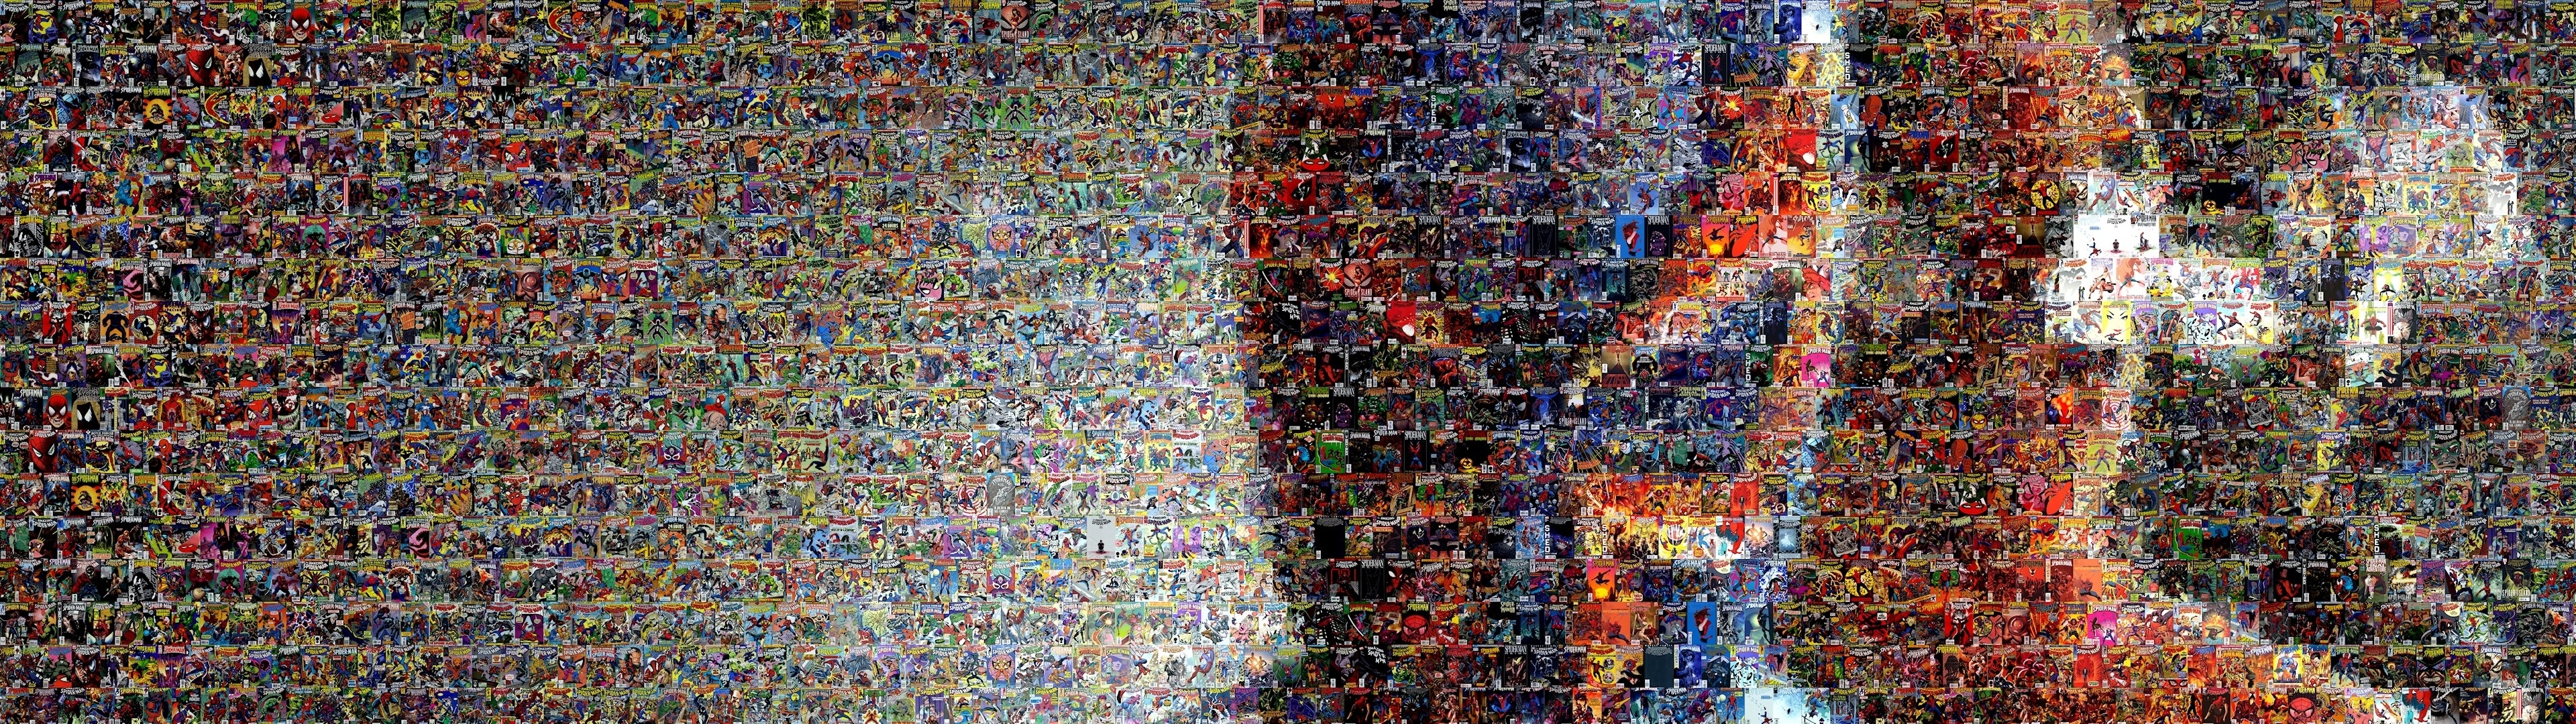 Mosaic Marvel Ics Collage Multi Dual Screen E Wallpaper Background